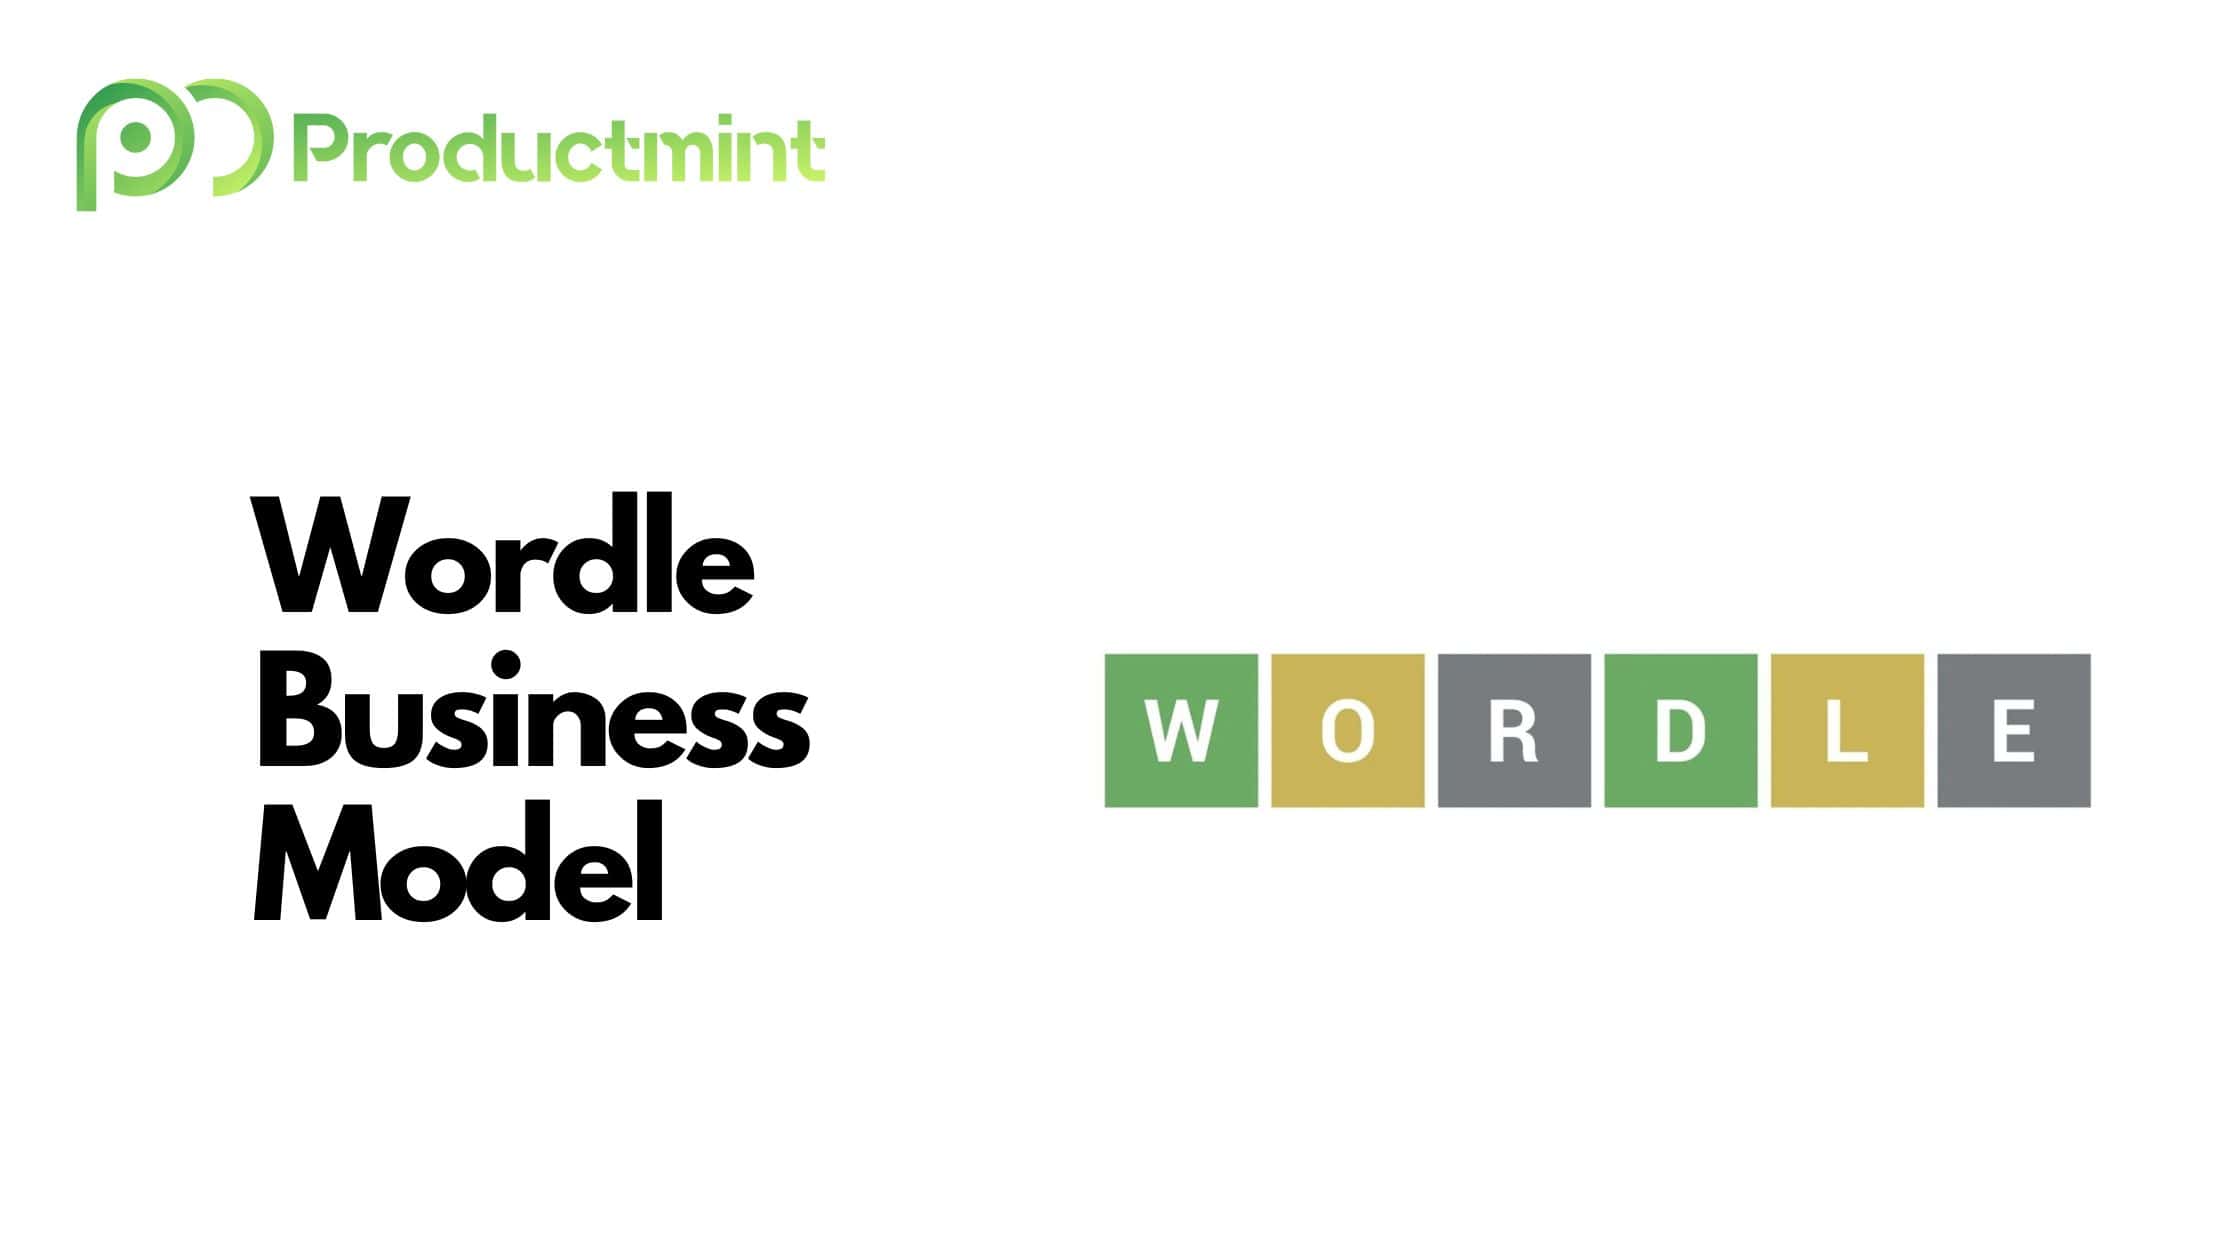 Wordle Business Model